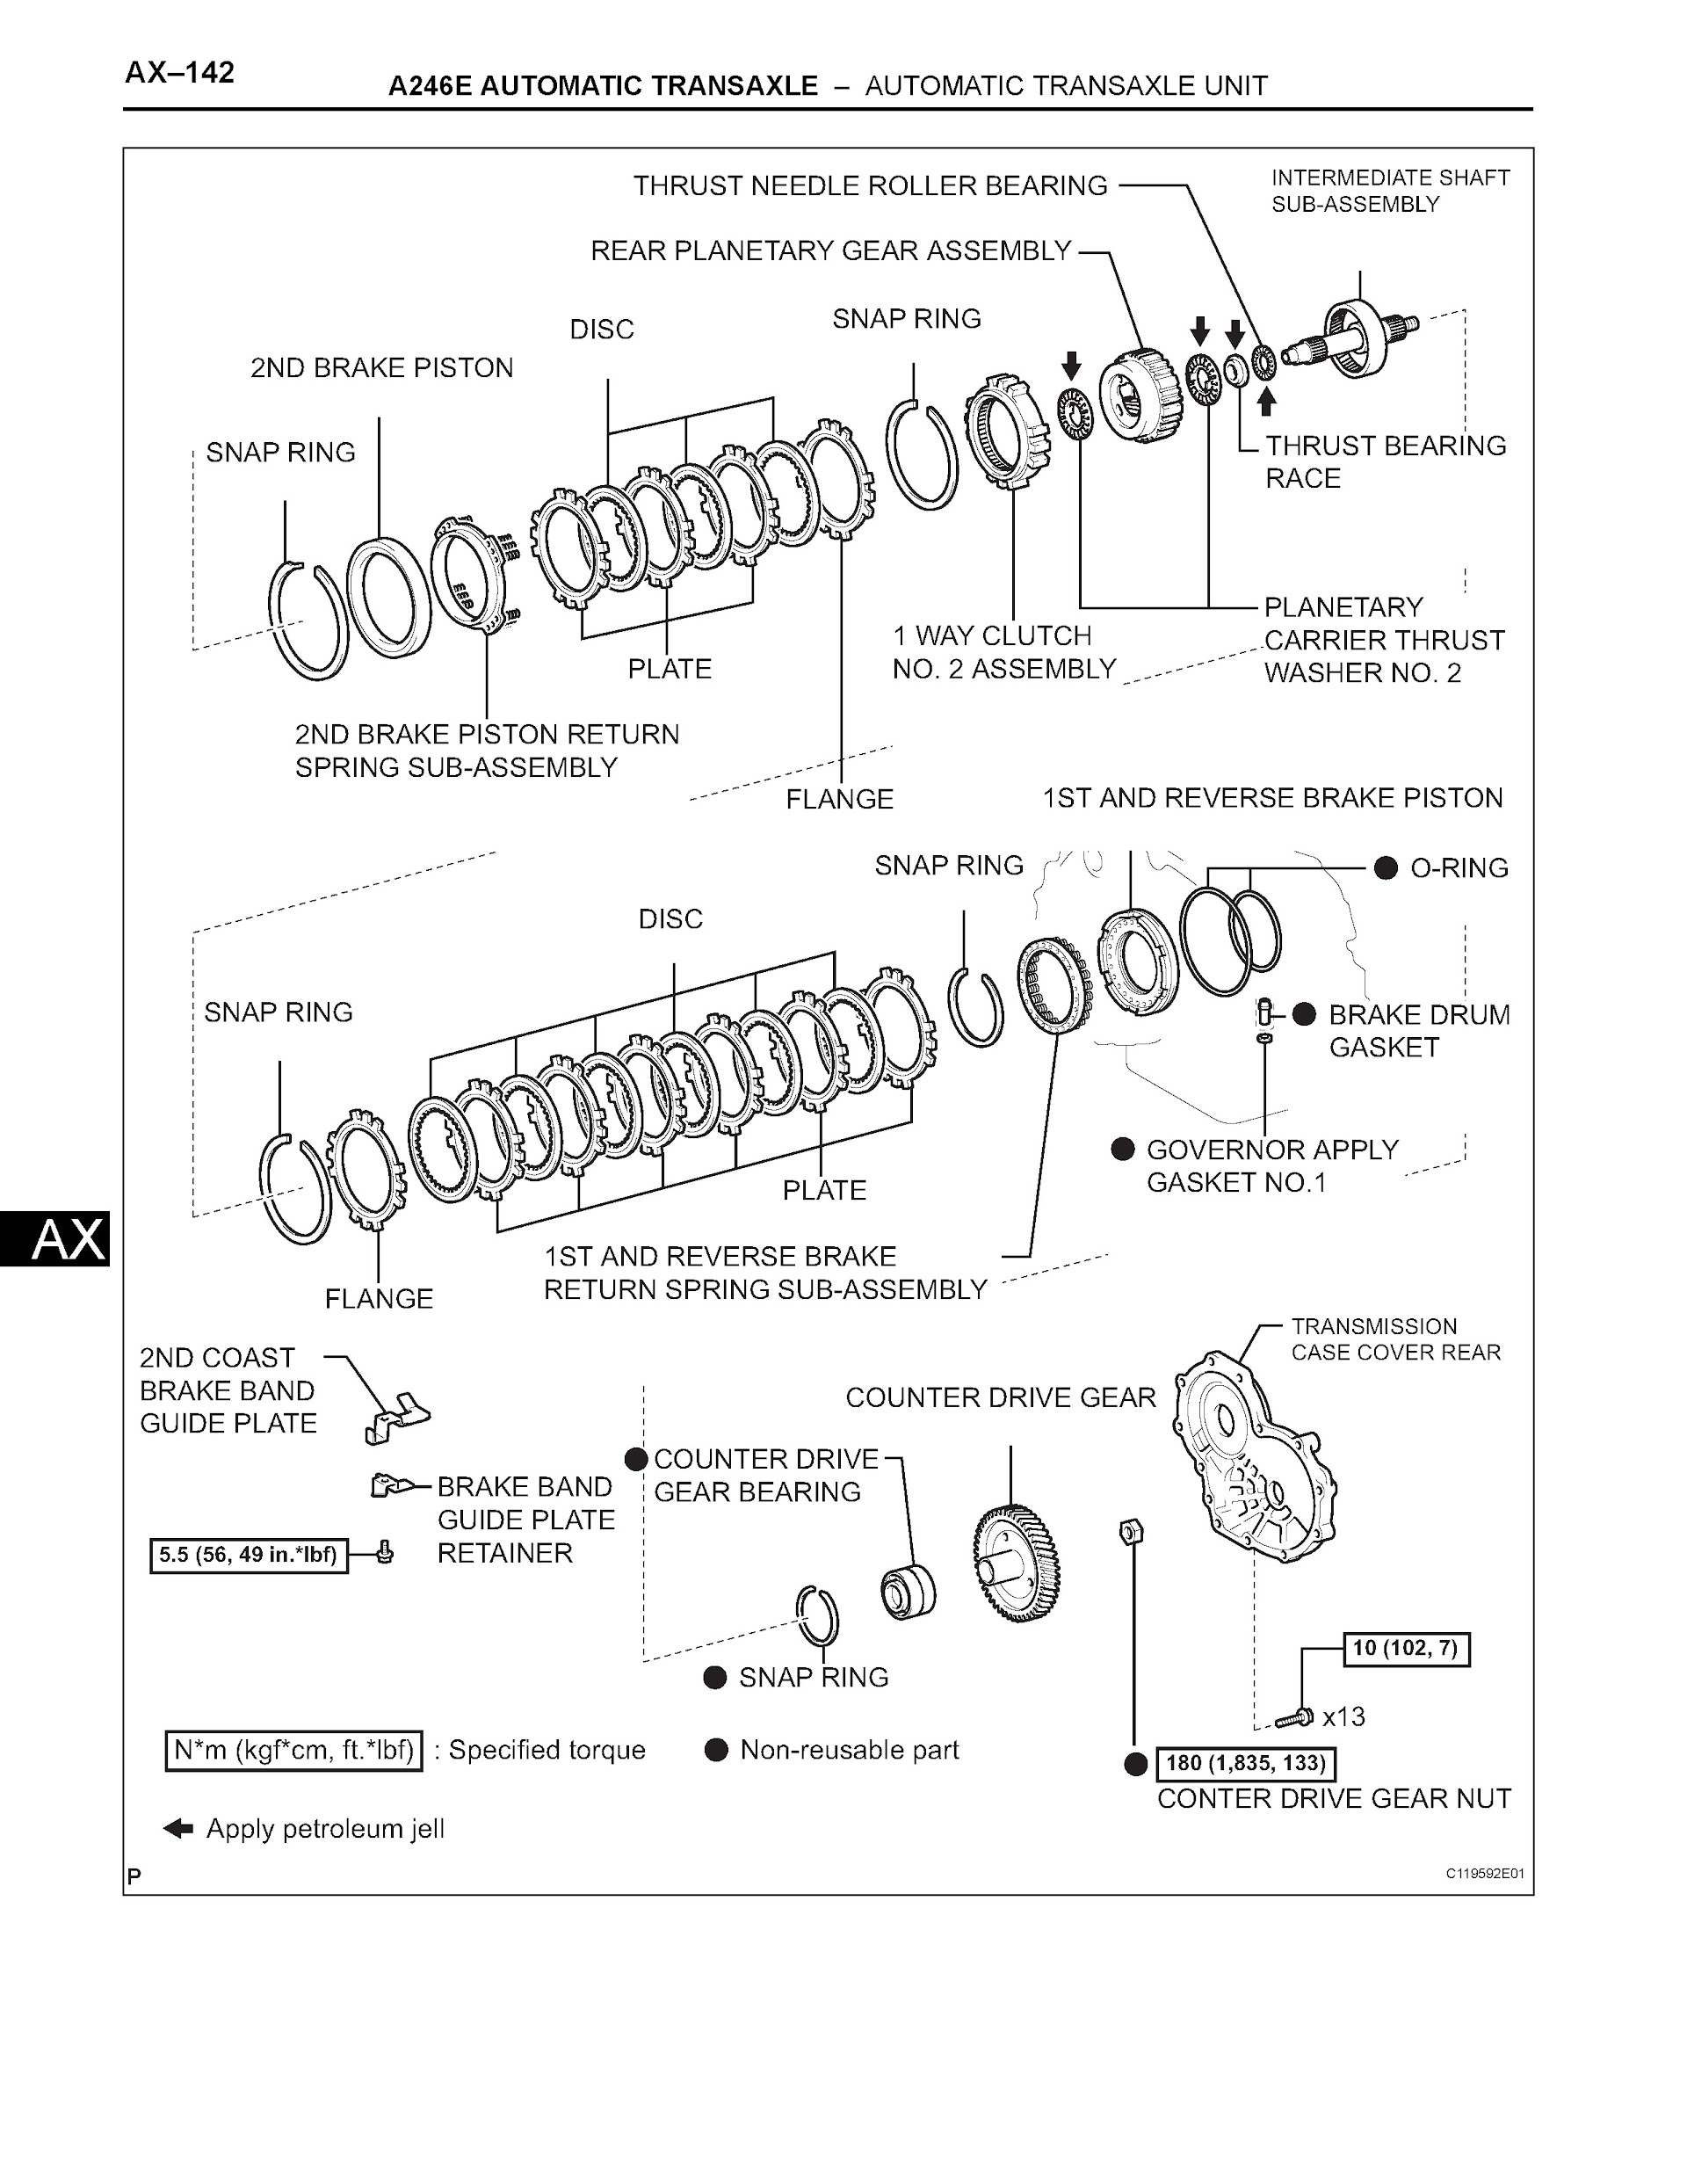 2007 Toyota Matrix Repair Manual, Automatic Transaxle Unit